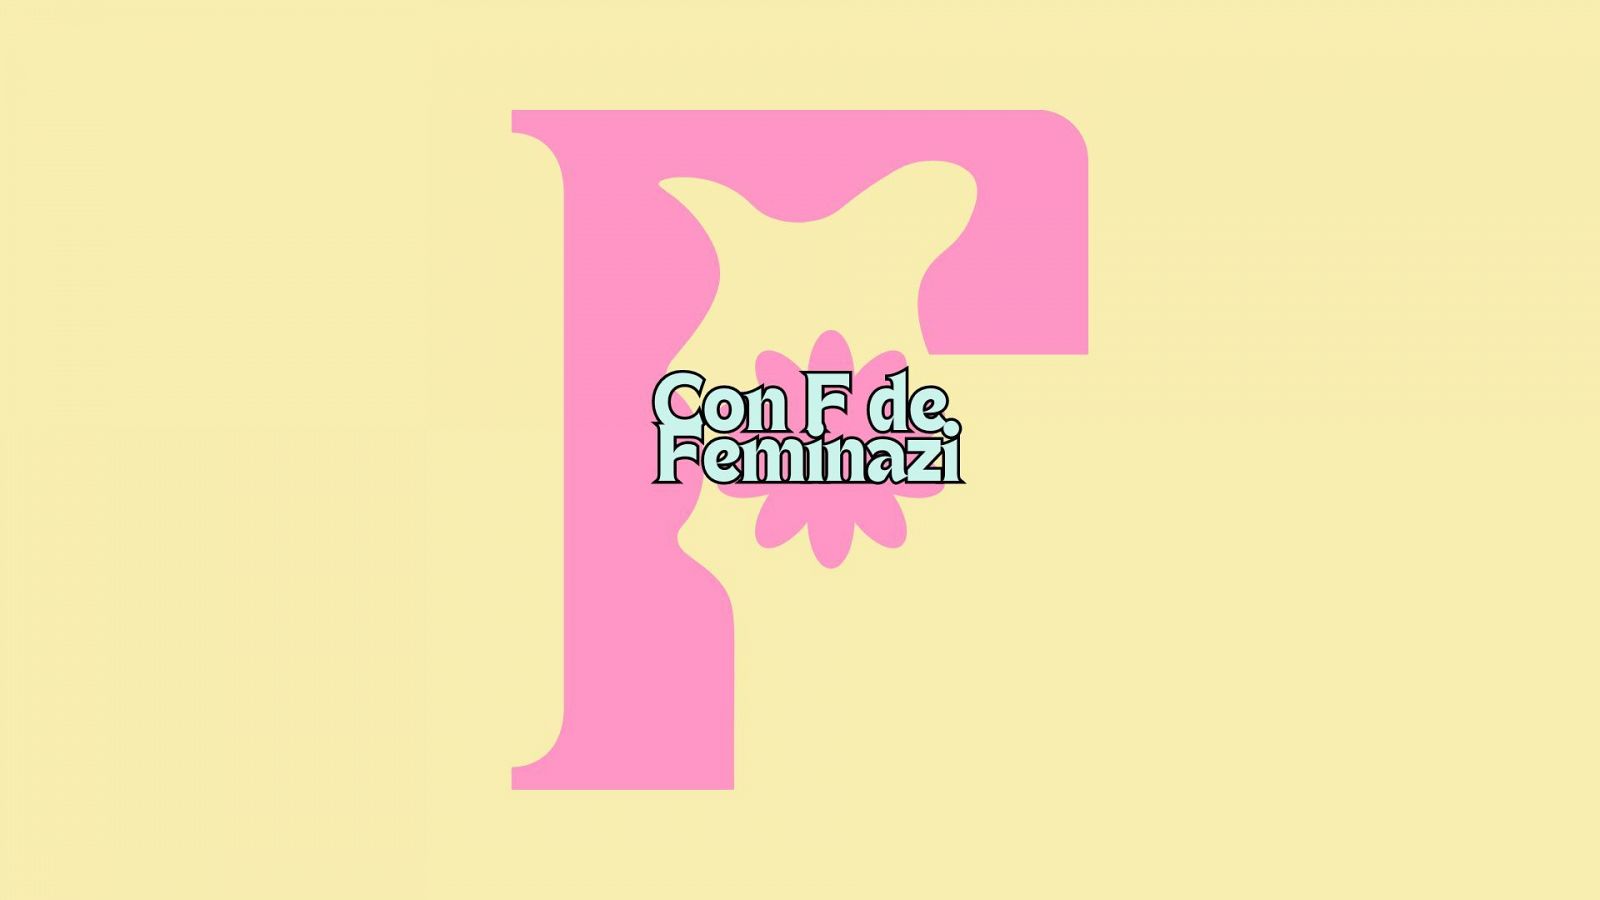 Un abecedario propio - Con F de Feminazi - Escuchar ahora